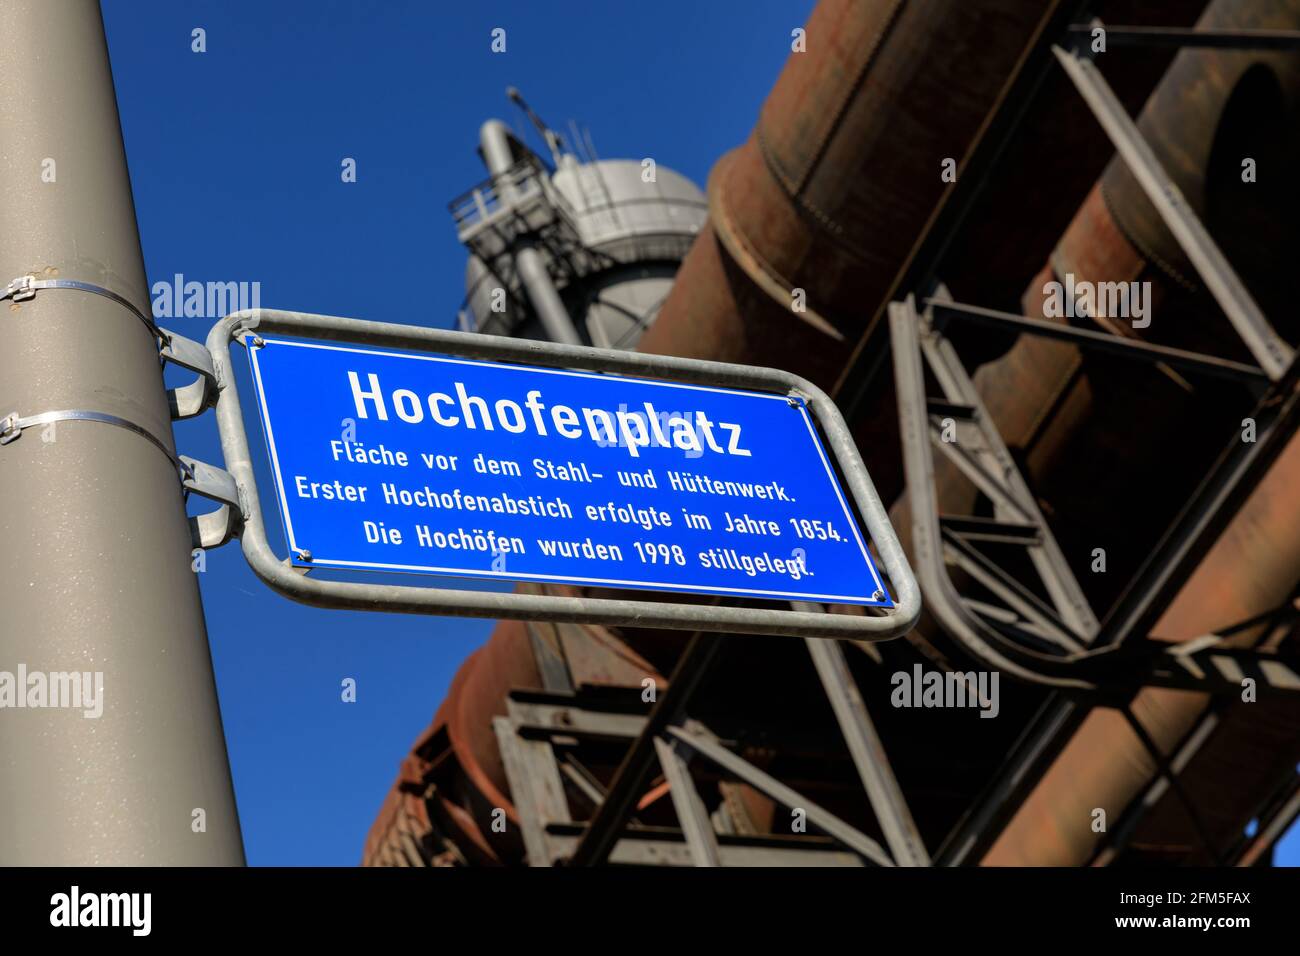 Hochofenplatz, sign illustrating the historic site of the former ThyssenKrupp steelworks at Phoenix West, Dortmund, Germany Stock Photo